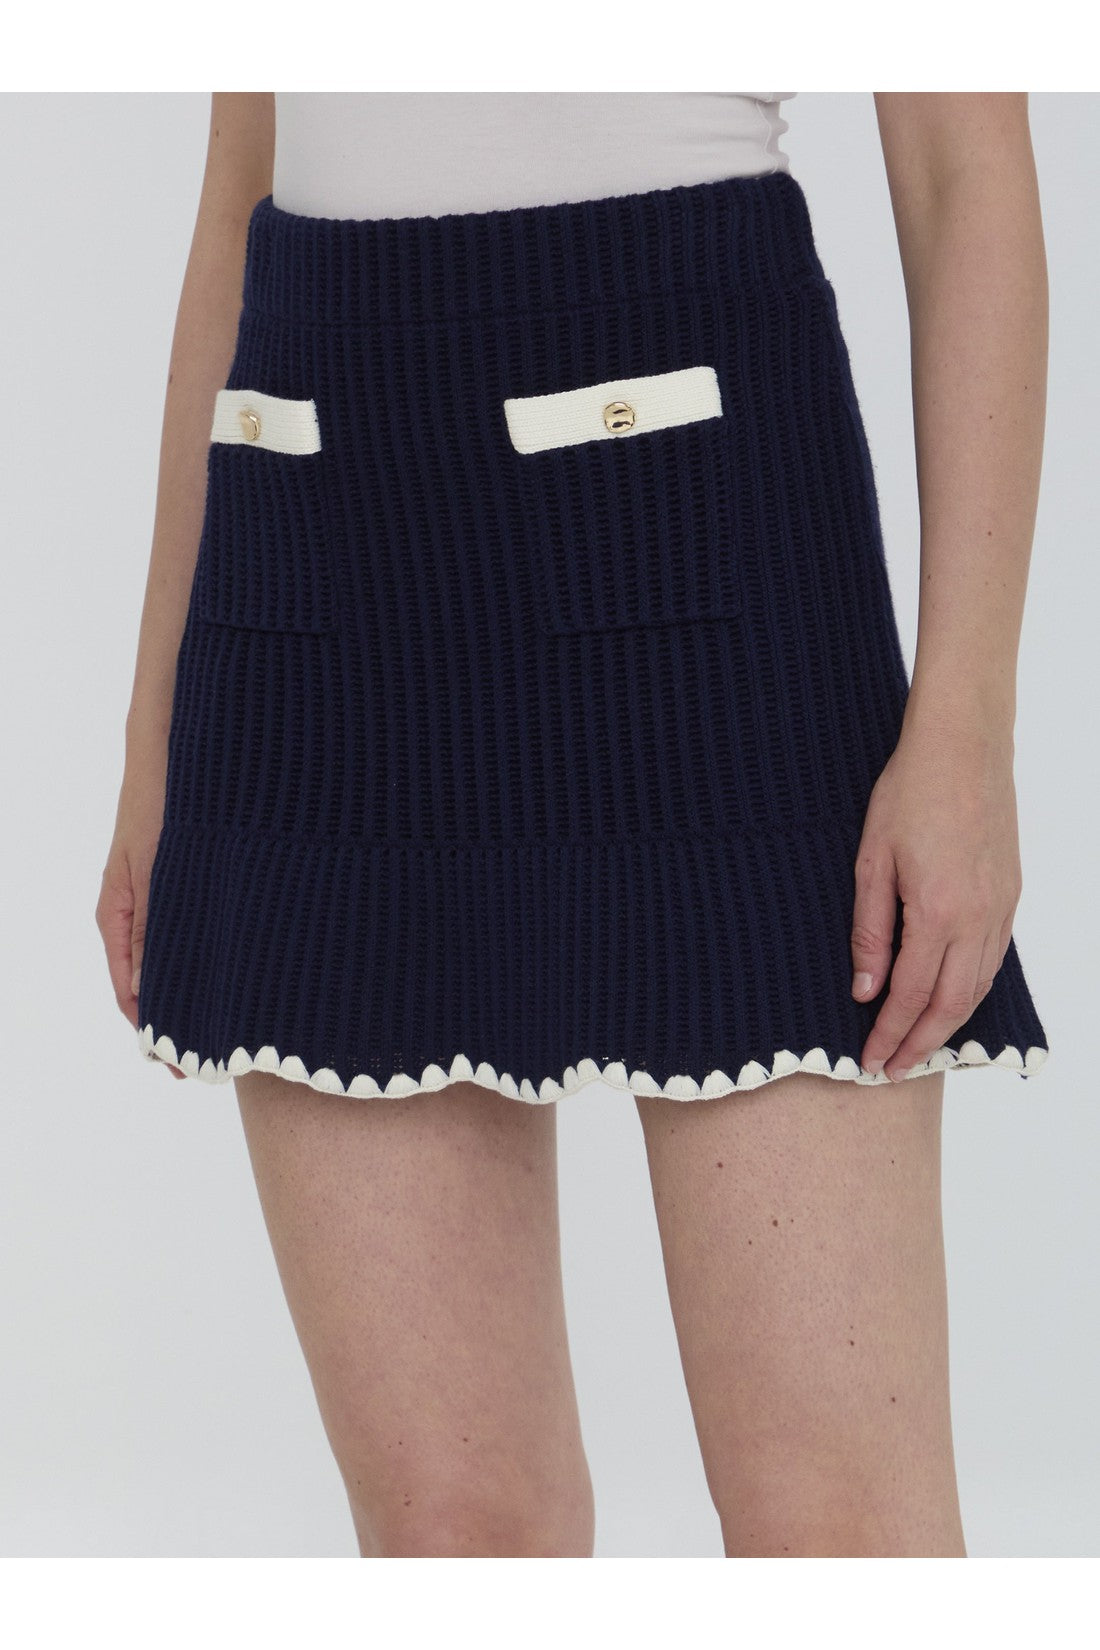 Crochet miniskirt